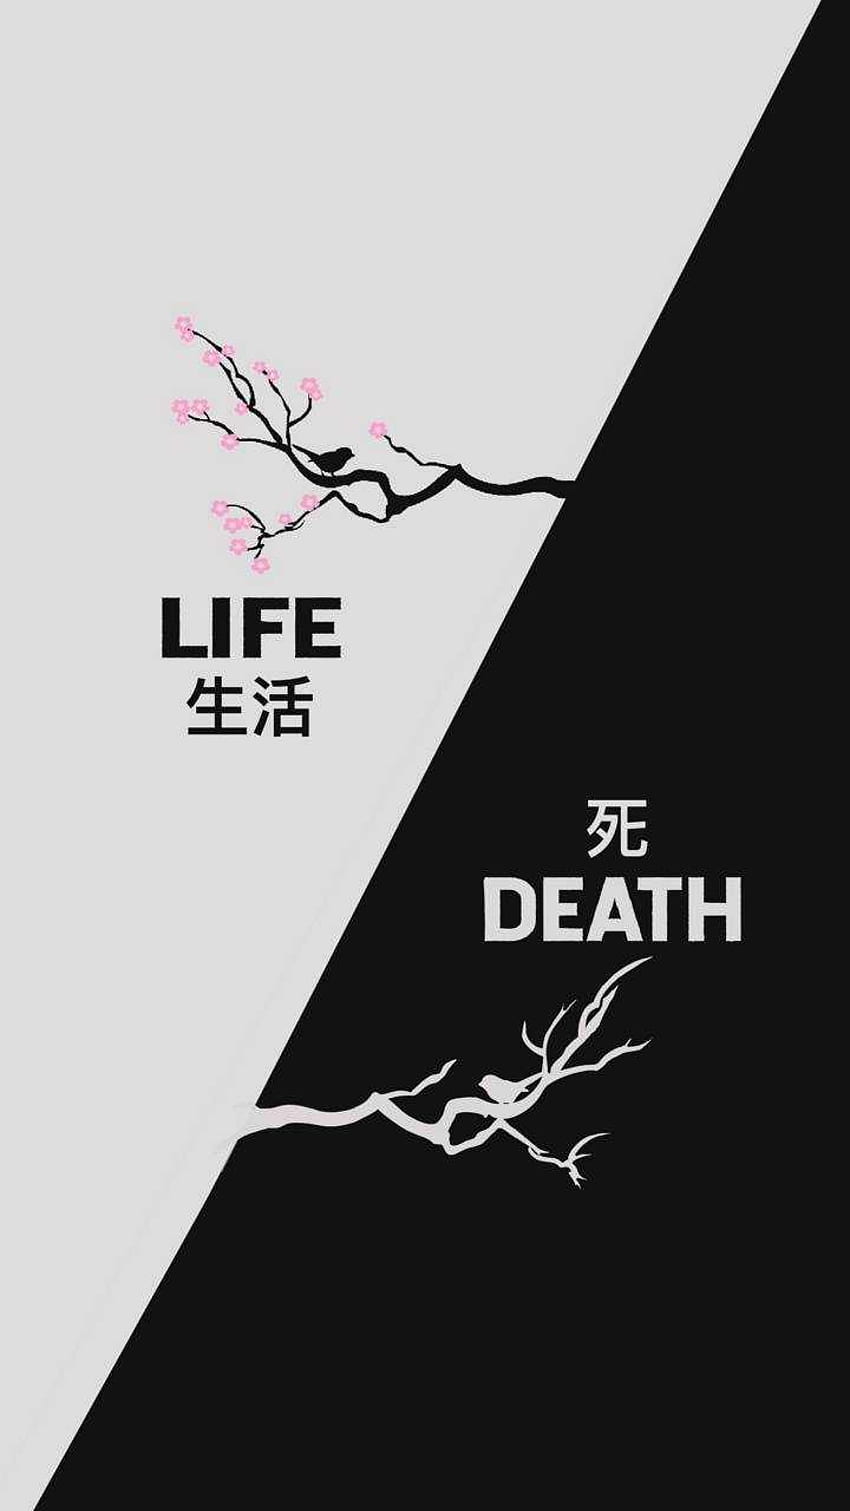 Life is dead. Обои Life Death. Смерть Минимализм. Обои на телефон Death Life. Обои Life Death Wallpaper.